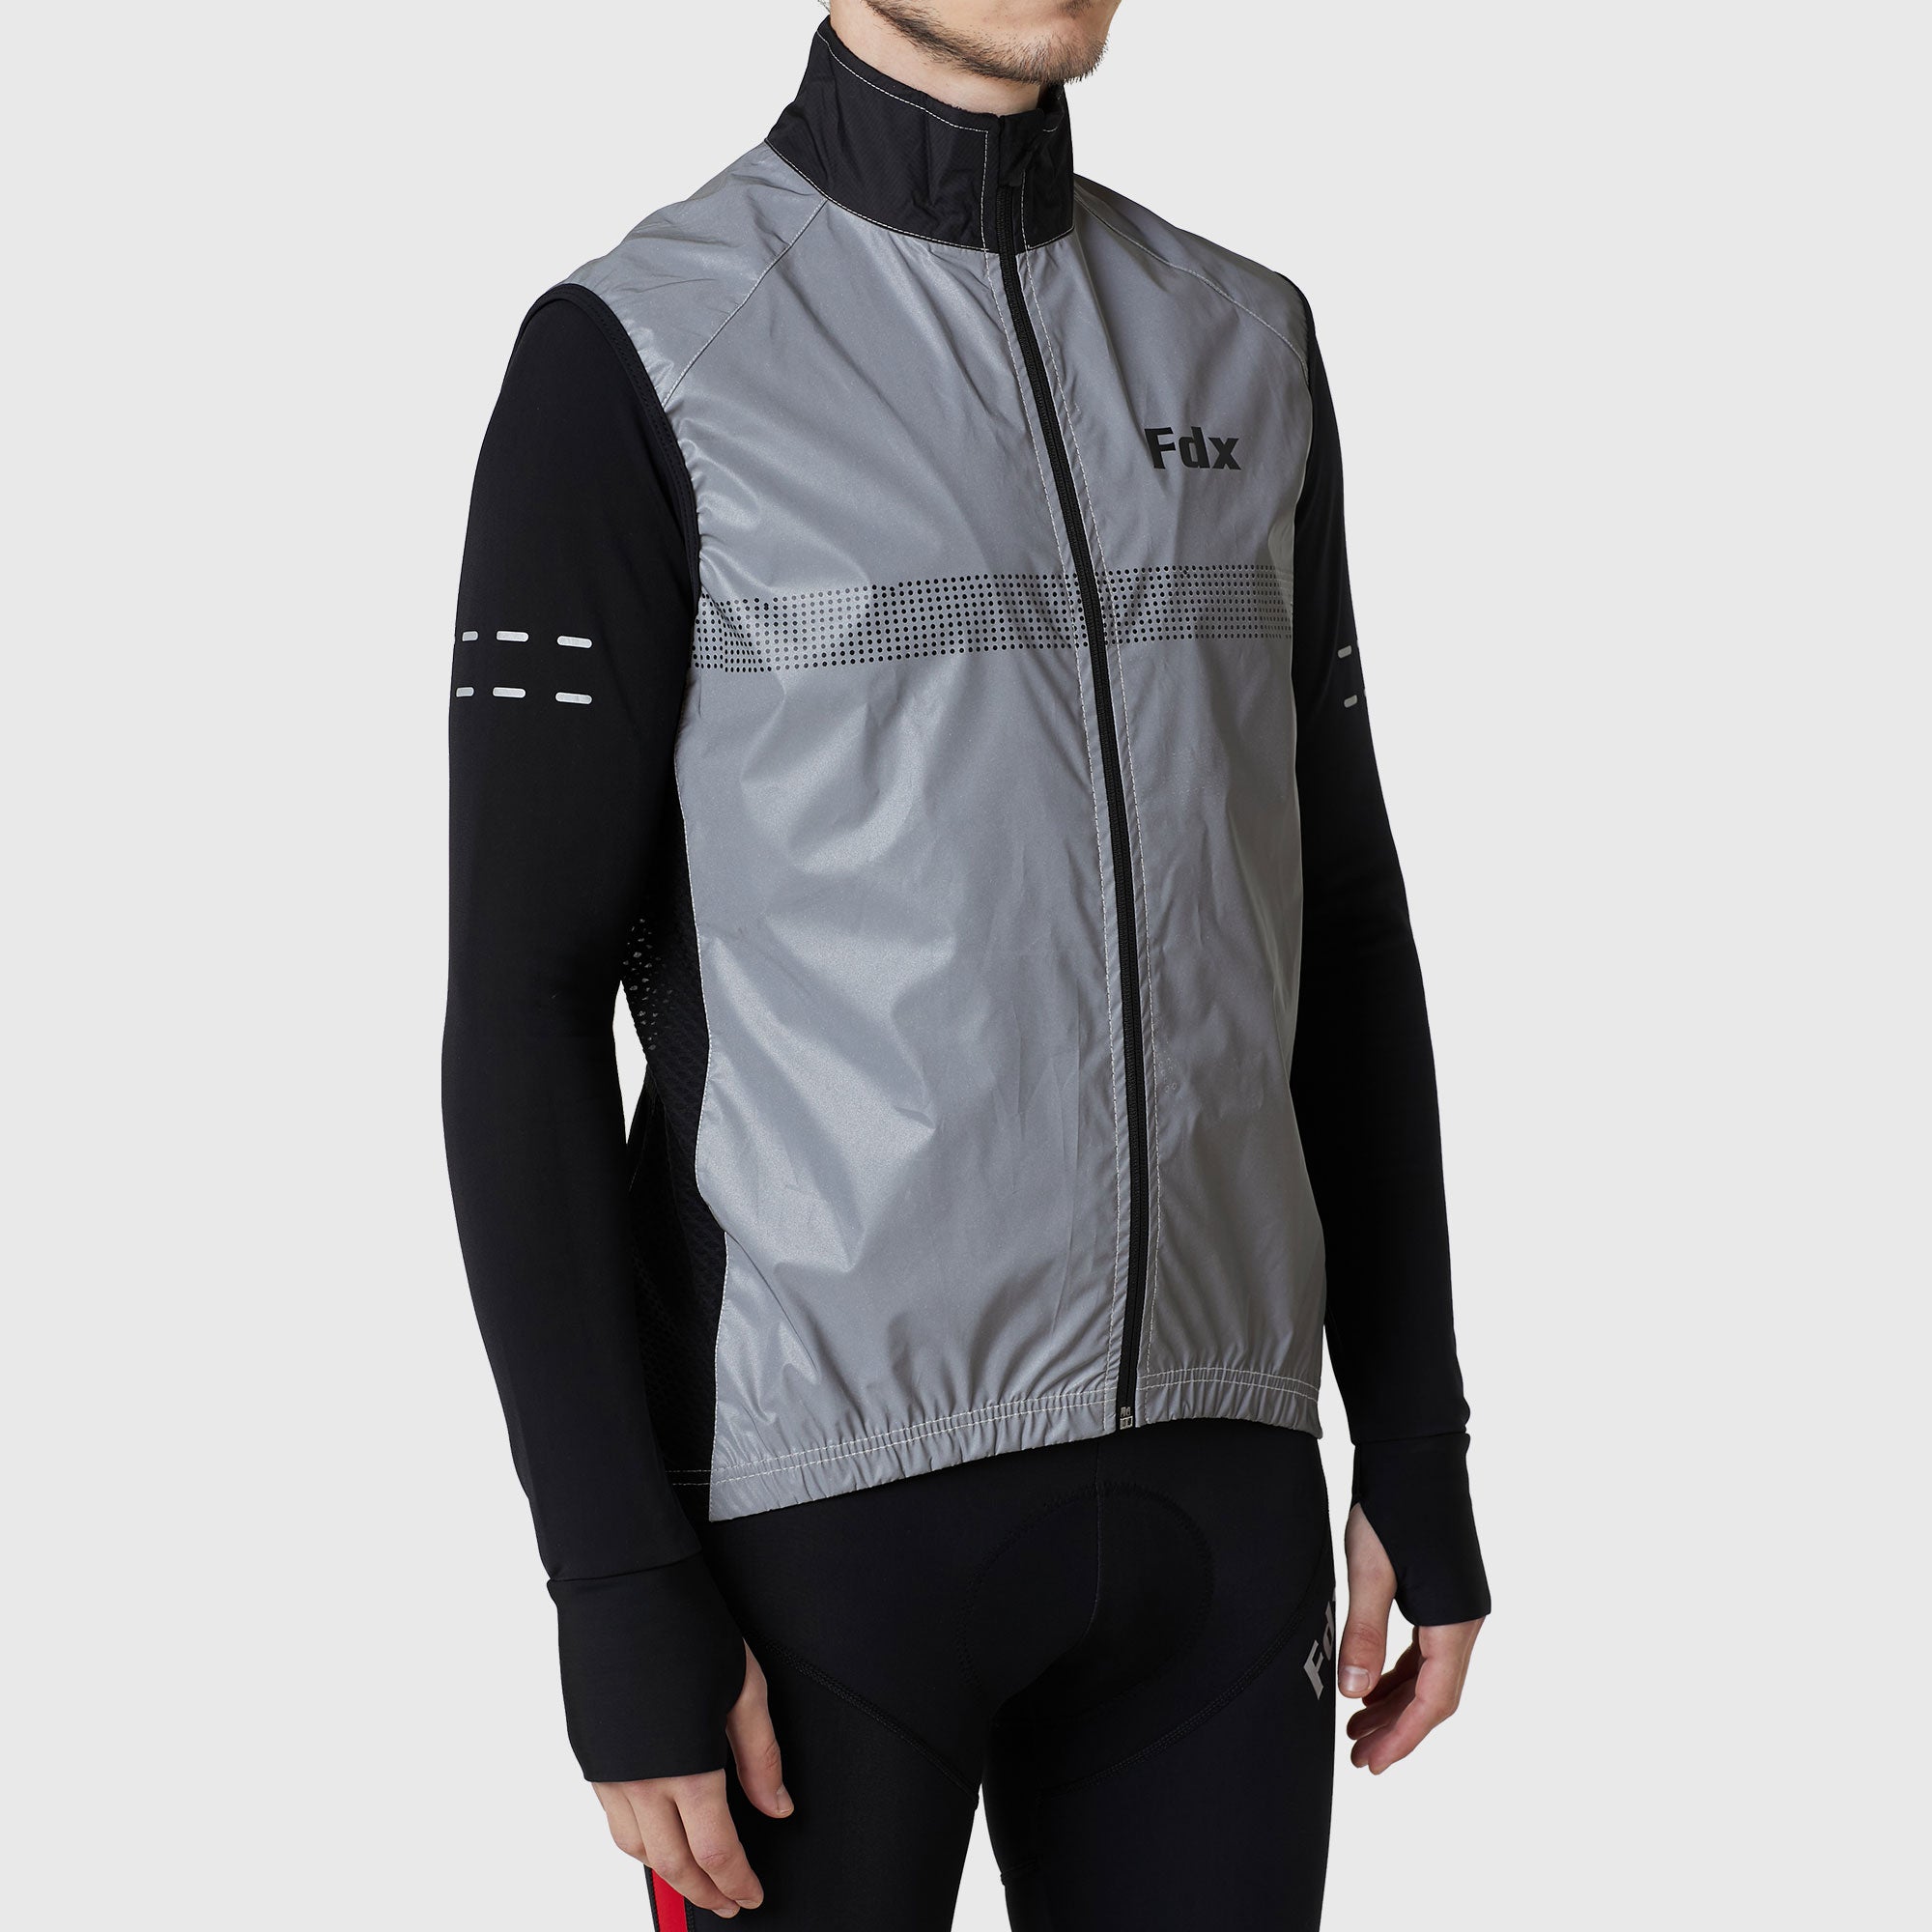 Fdx Grey Best Men's Cycling Gilet Sleeveless Vest for Winter Clothing 360° Reflective, Lightweight, Windproof, Waterproof & Pockets